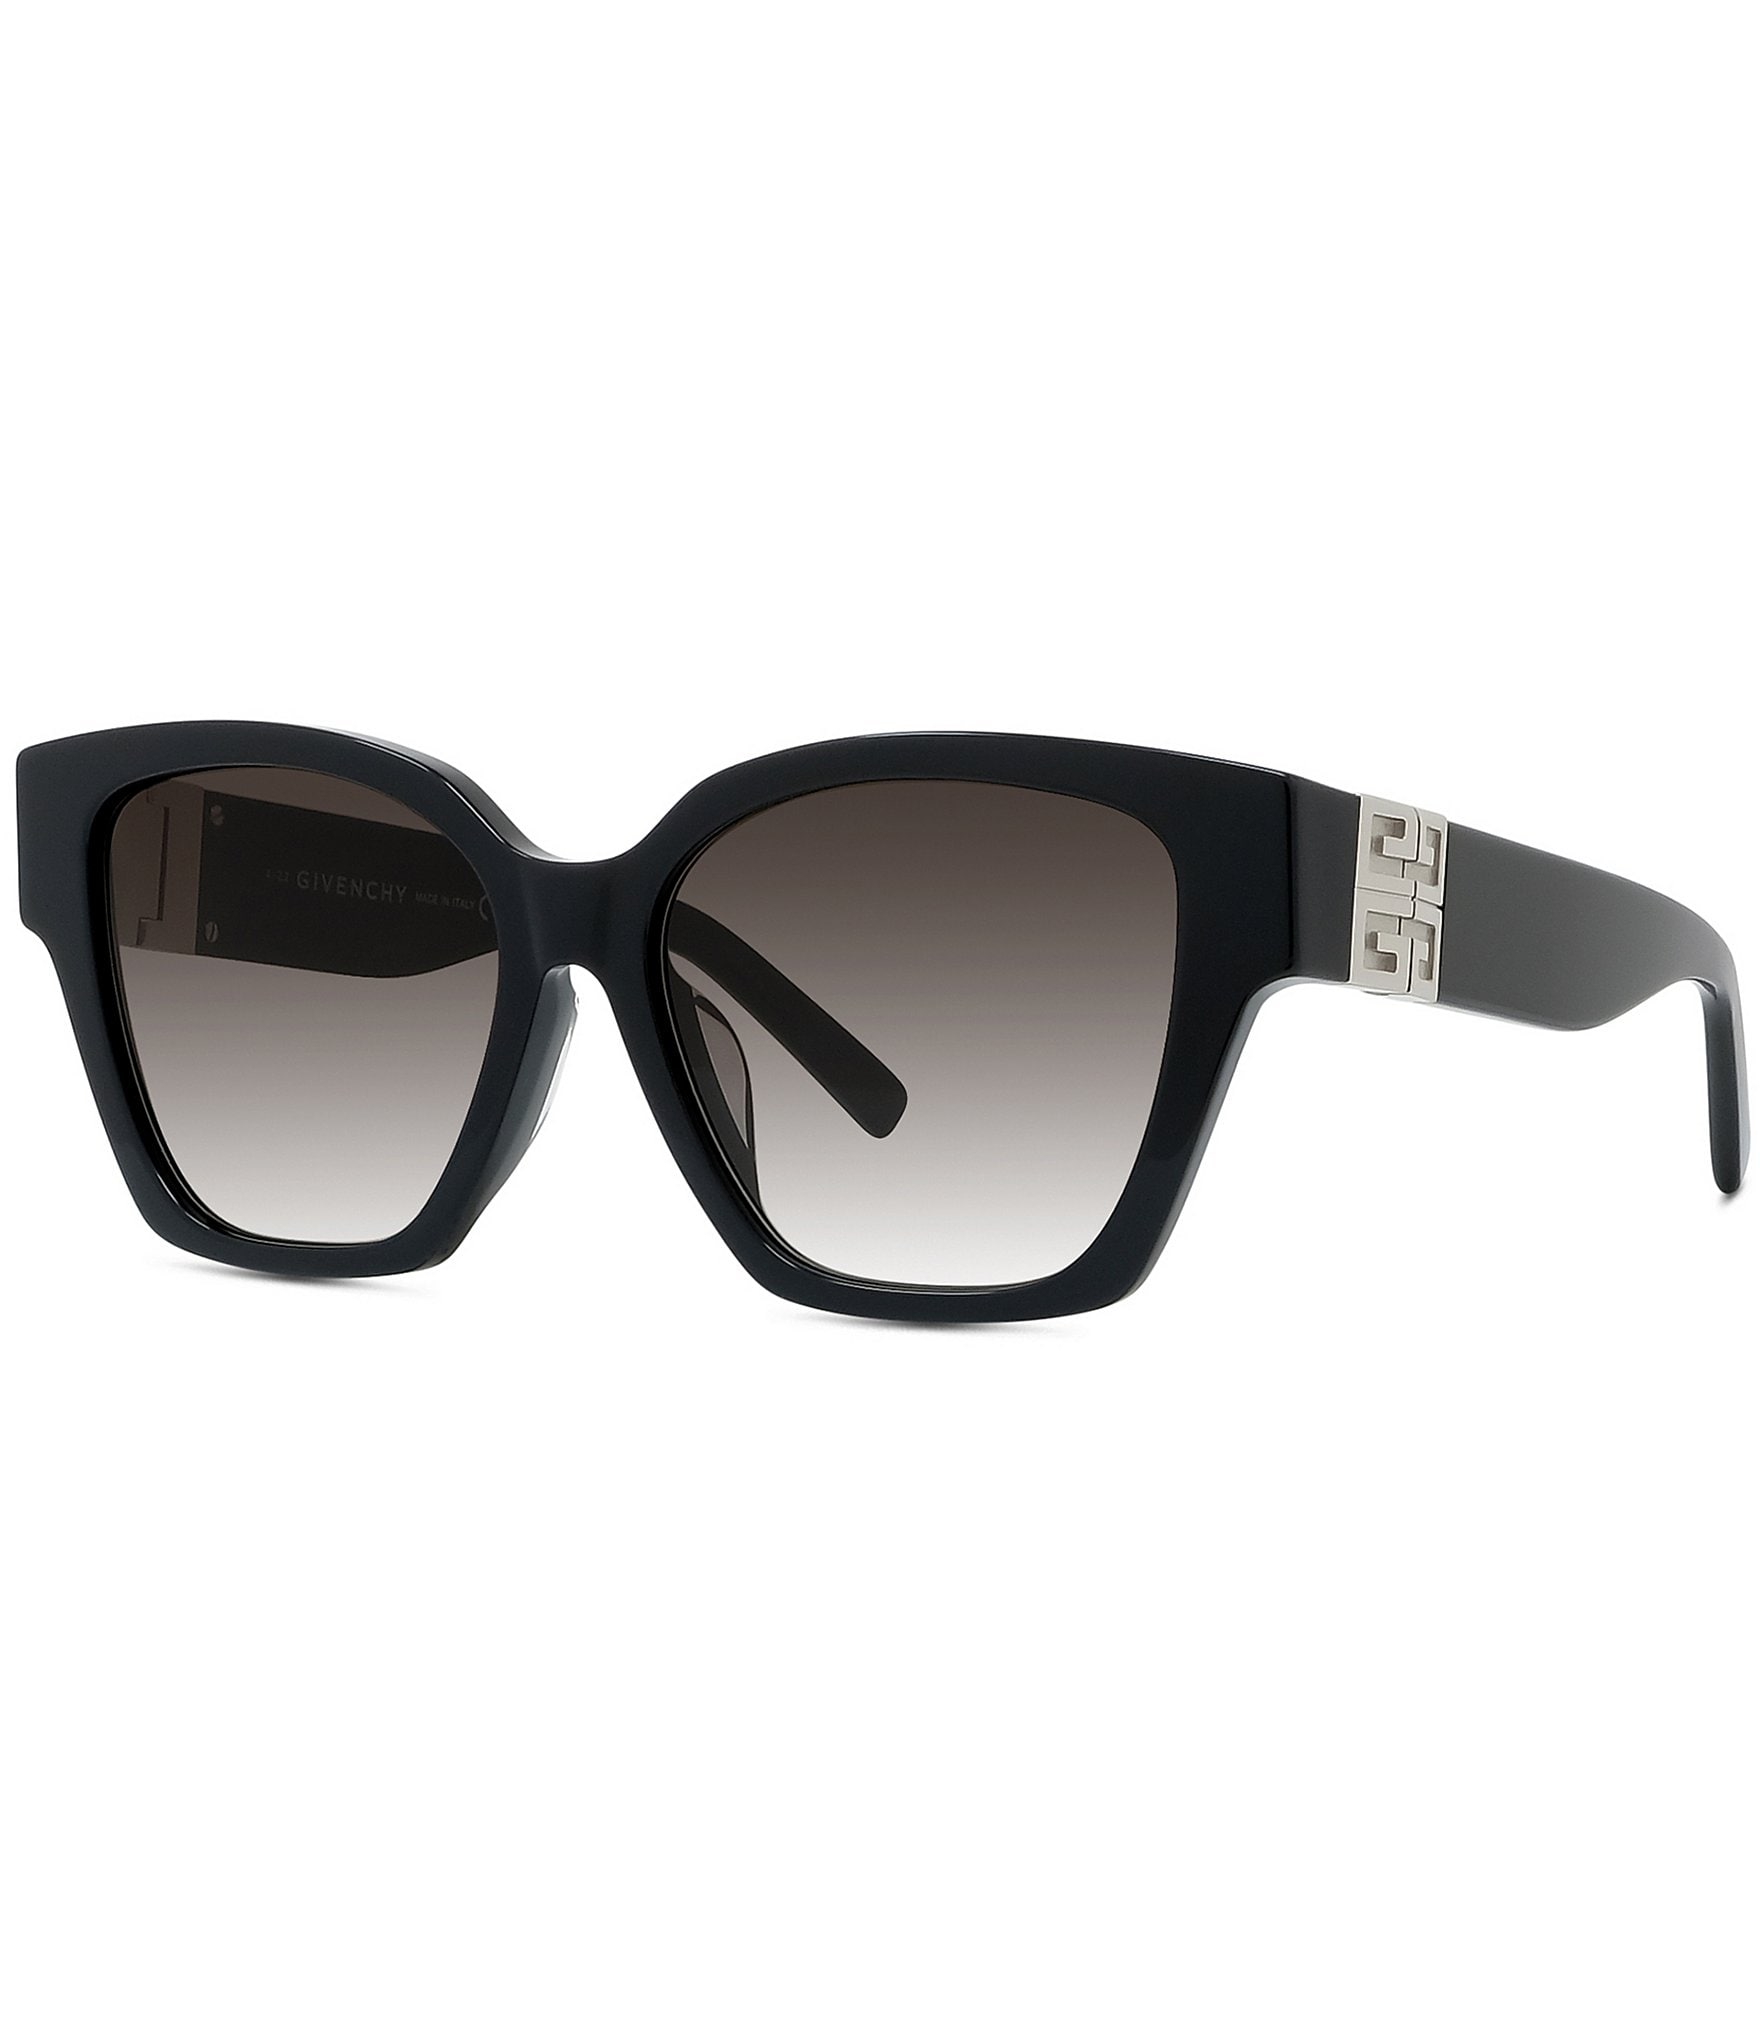 Sunglasses & Eyewear for Men and Women | Dillard's